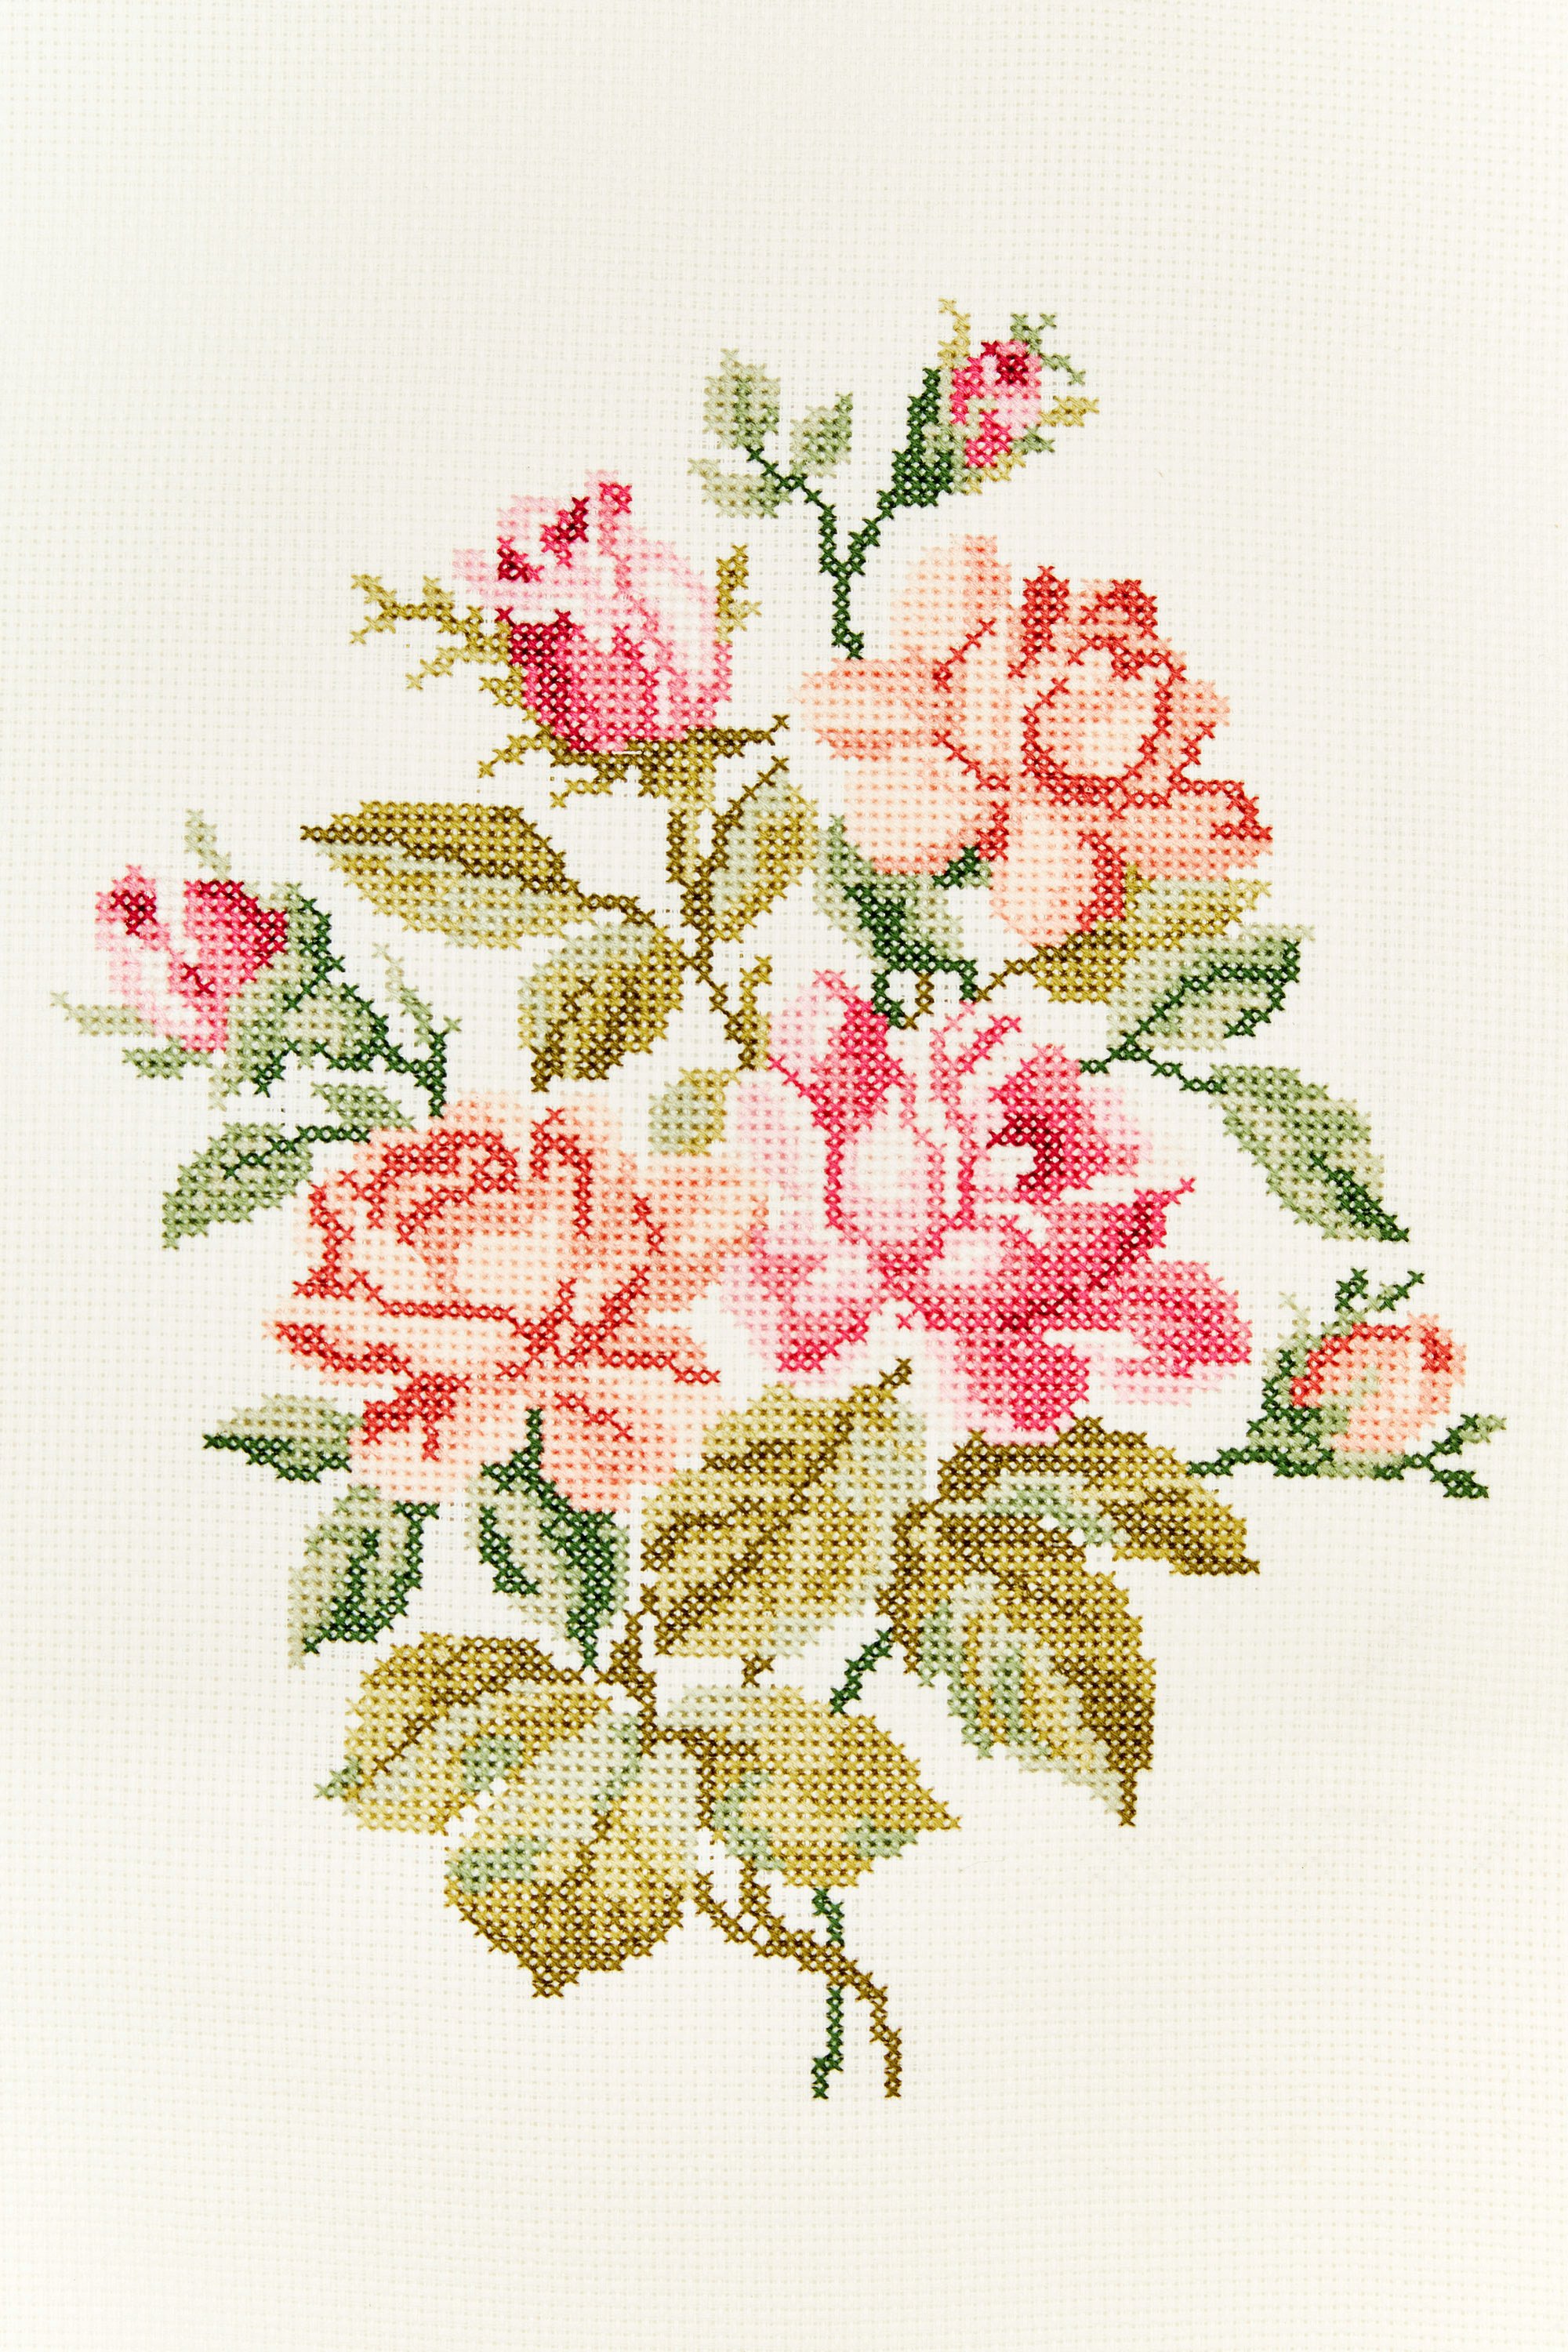 Hand-dyed Aida Cloth-Rose Marble-11 Count thru 18 Count DMC cross-stitch fabric 